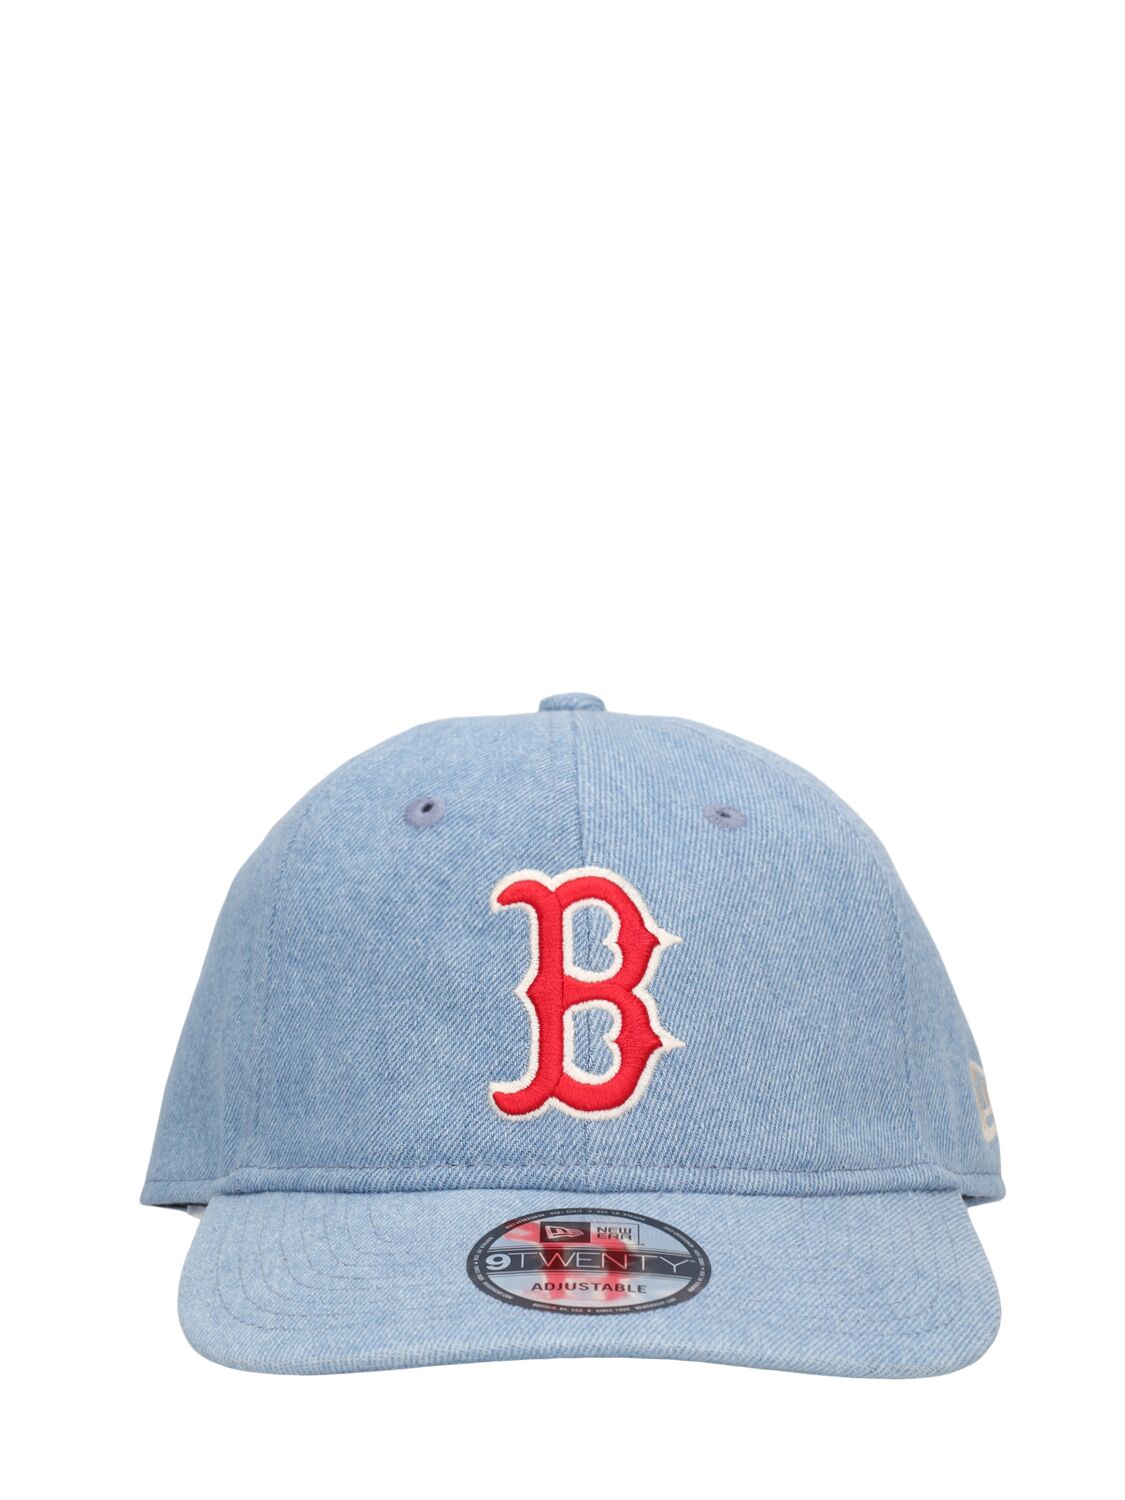 New Era Washed Denim Boston Red Sox Cap